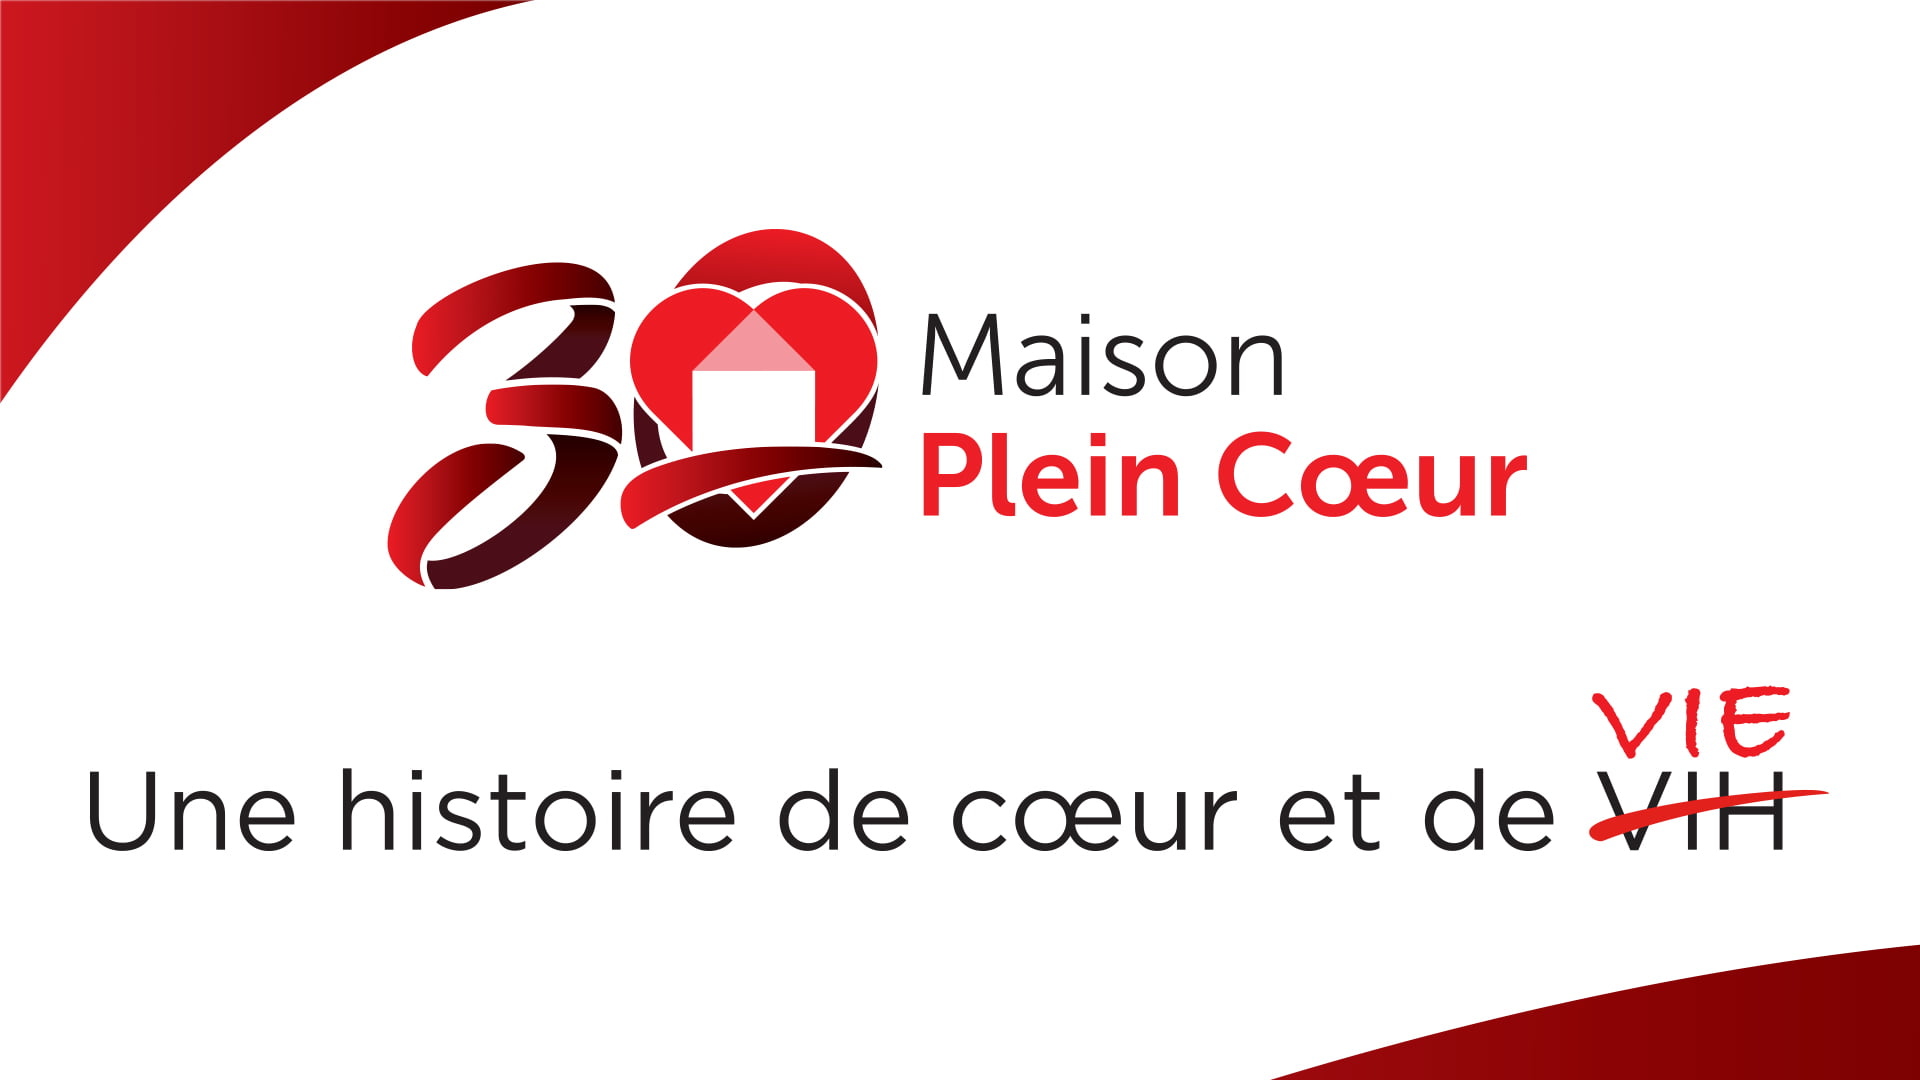 (c) Maisonpleincoeur.org